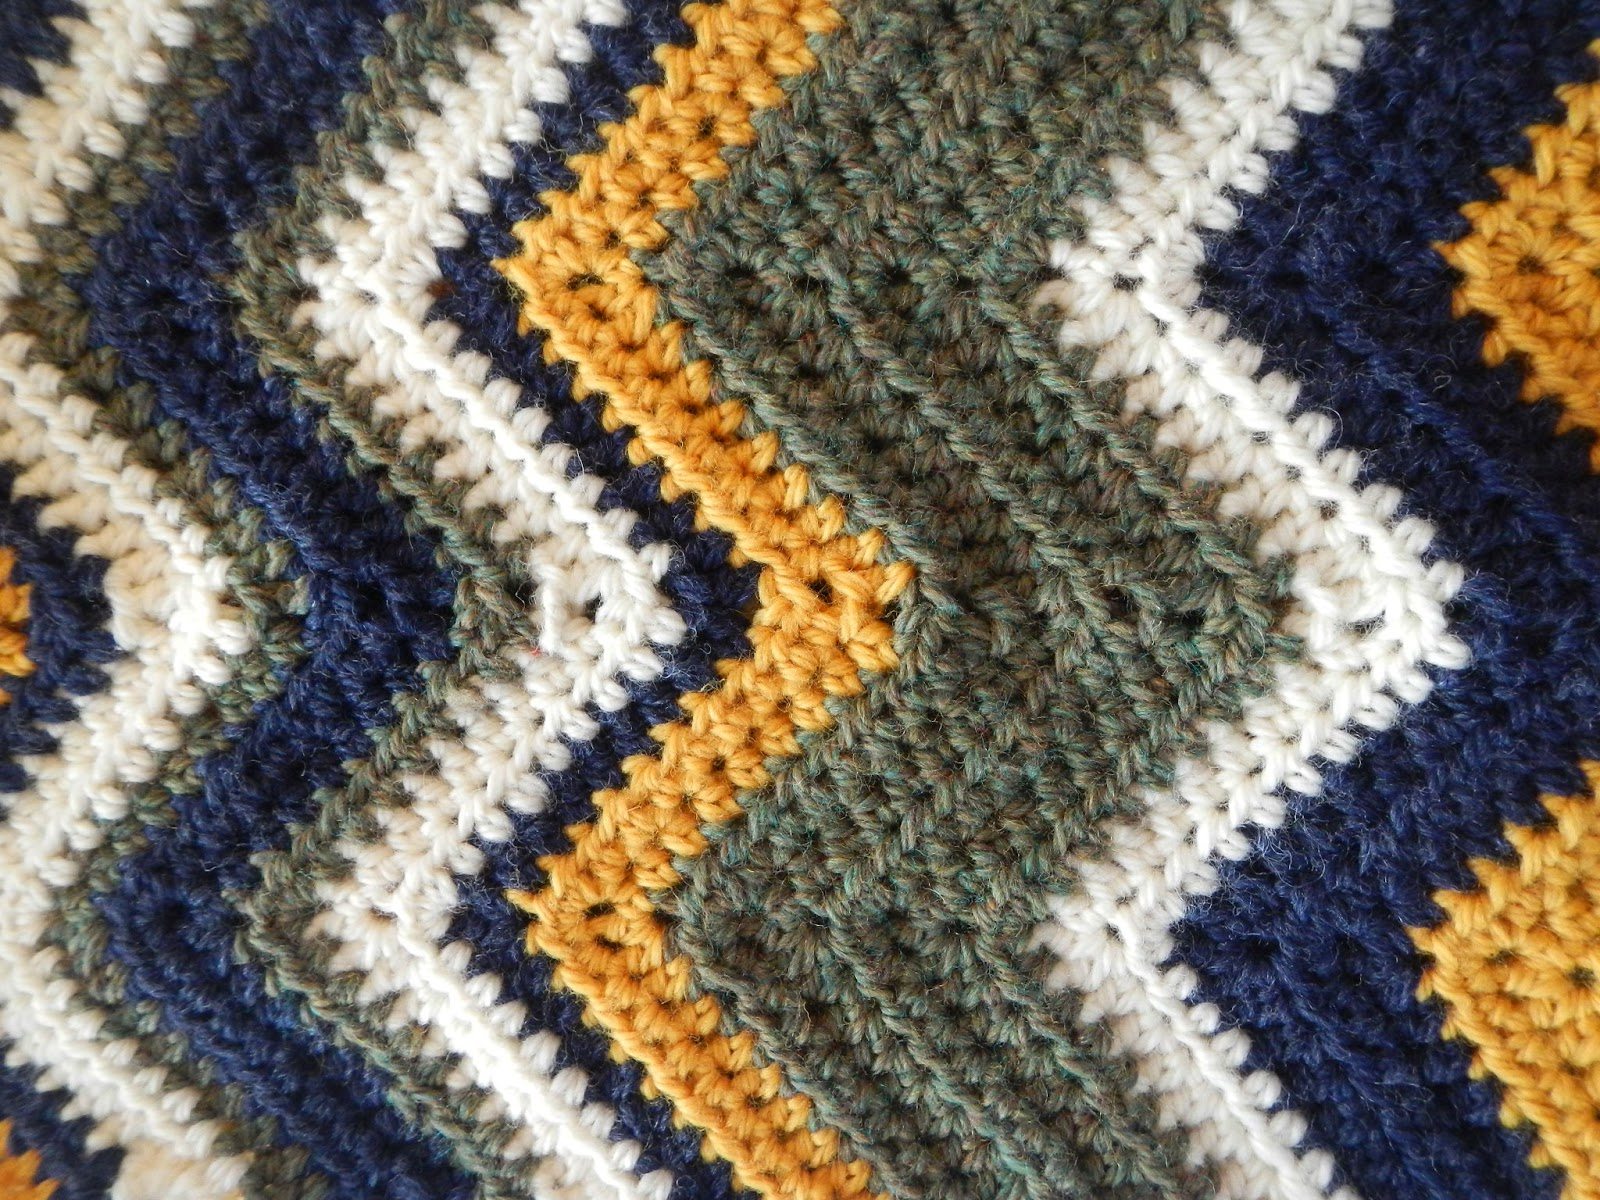 Chevron Infinity Scarf Knitting Pattern Apple Blossom Dreams Chevron Infinity Scarf From Free Pattern